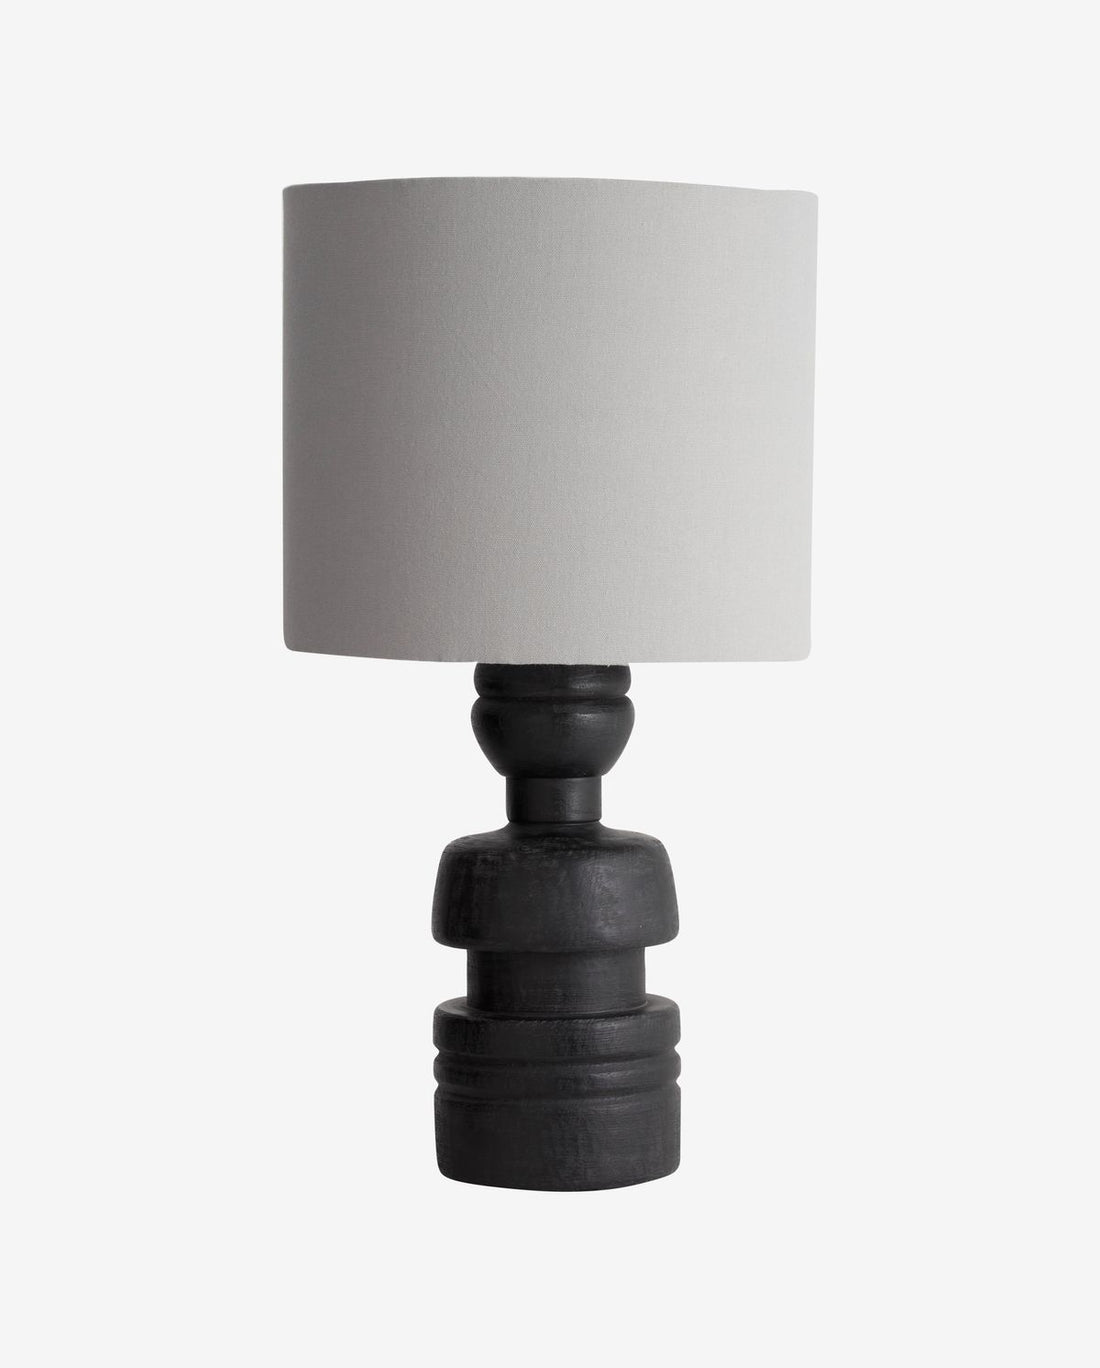 Nordal A/ S Loke Table Lamp - Svart m/ grå nyanse